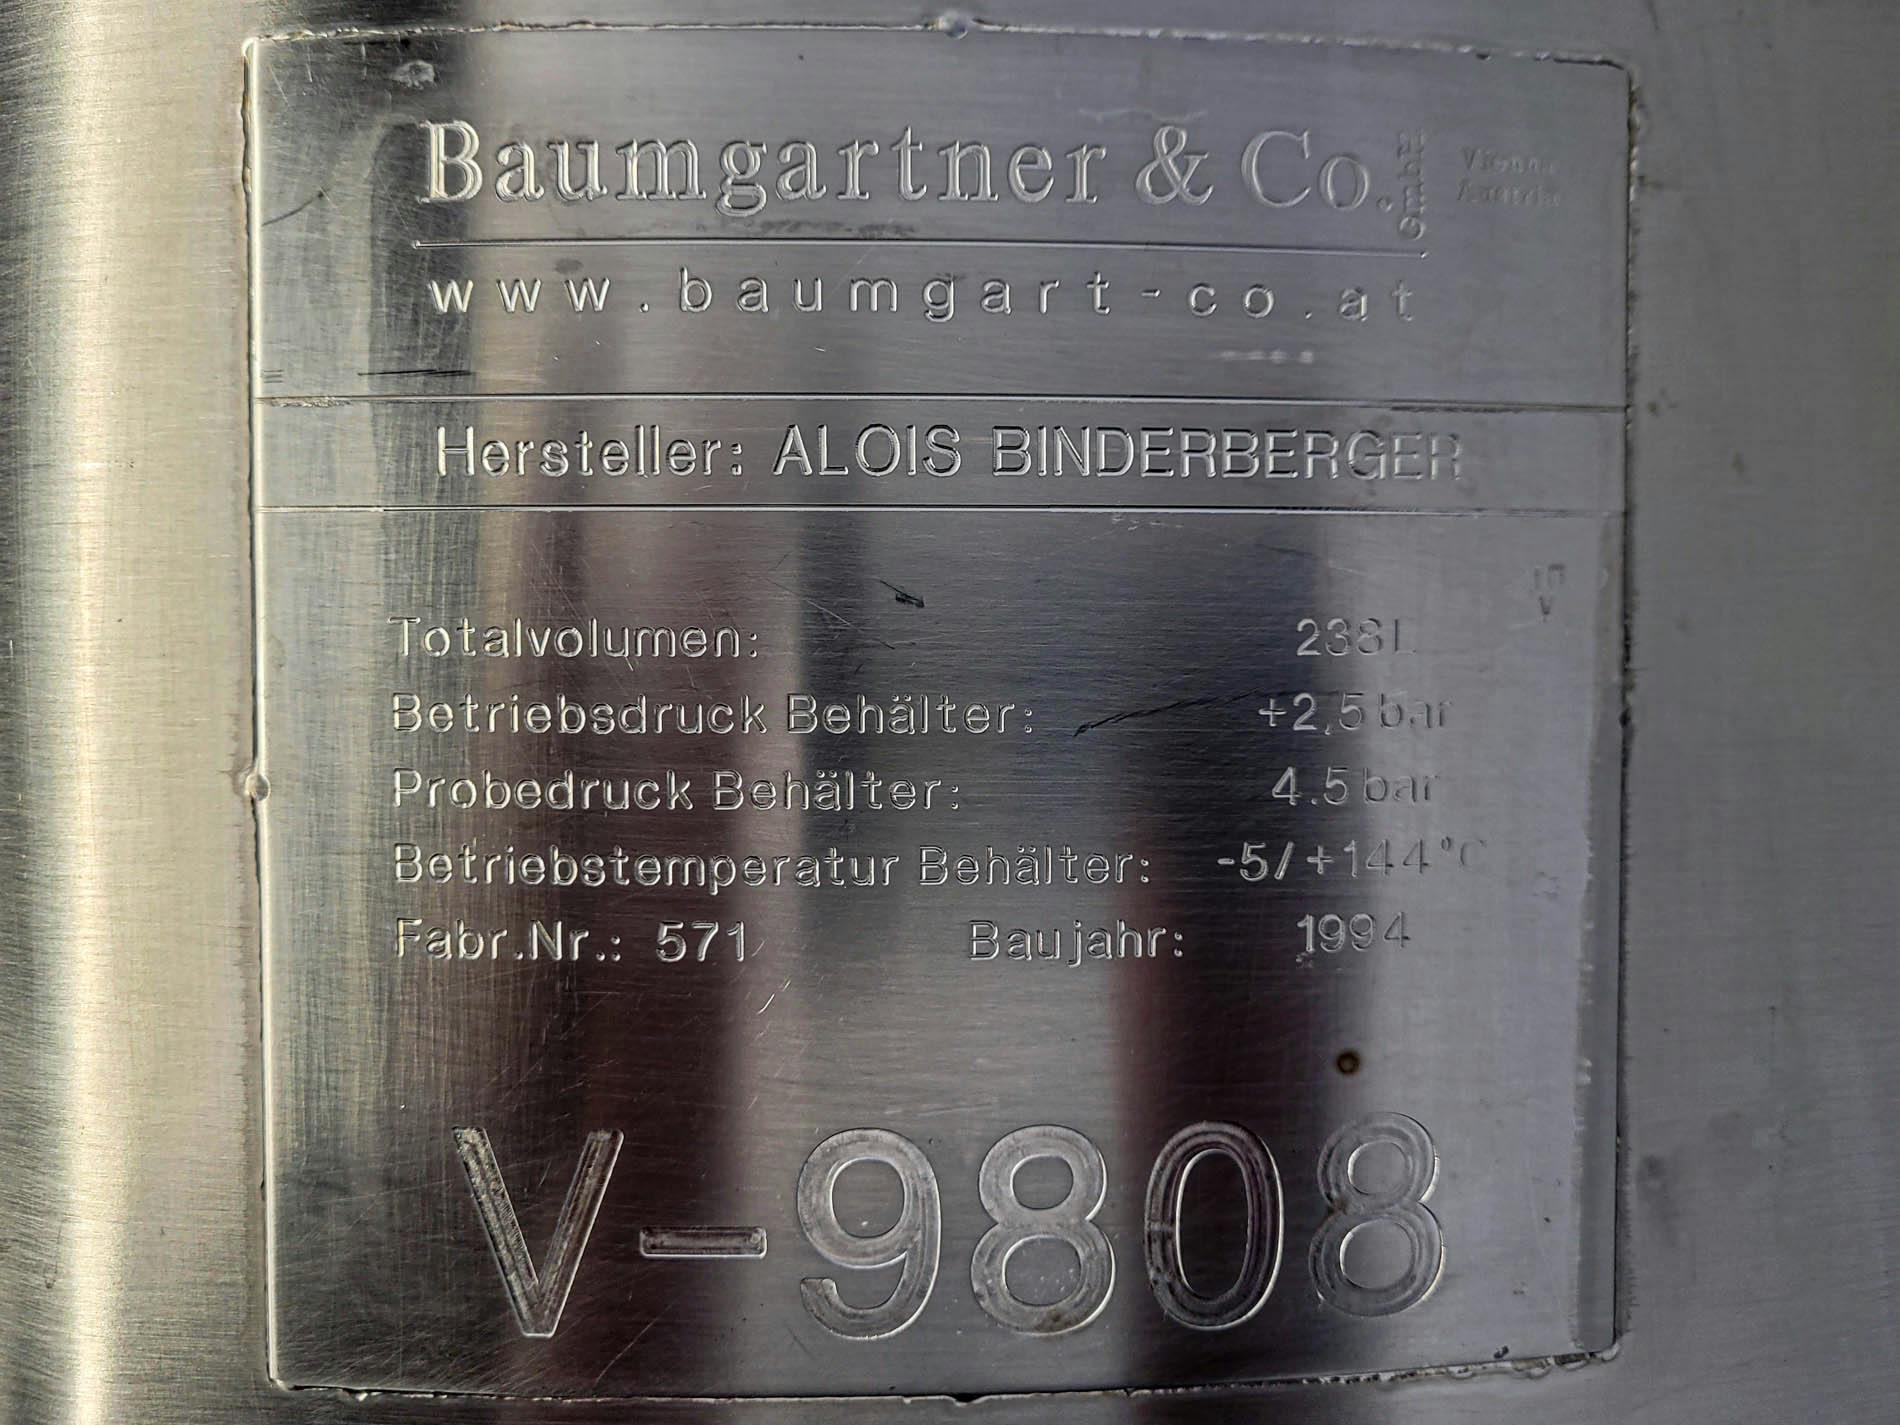 Baumgartner 238 Ltr. - Druckkessel - image 11